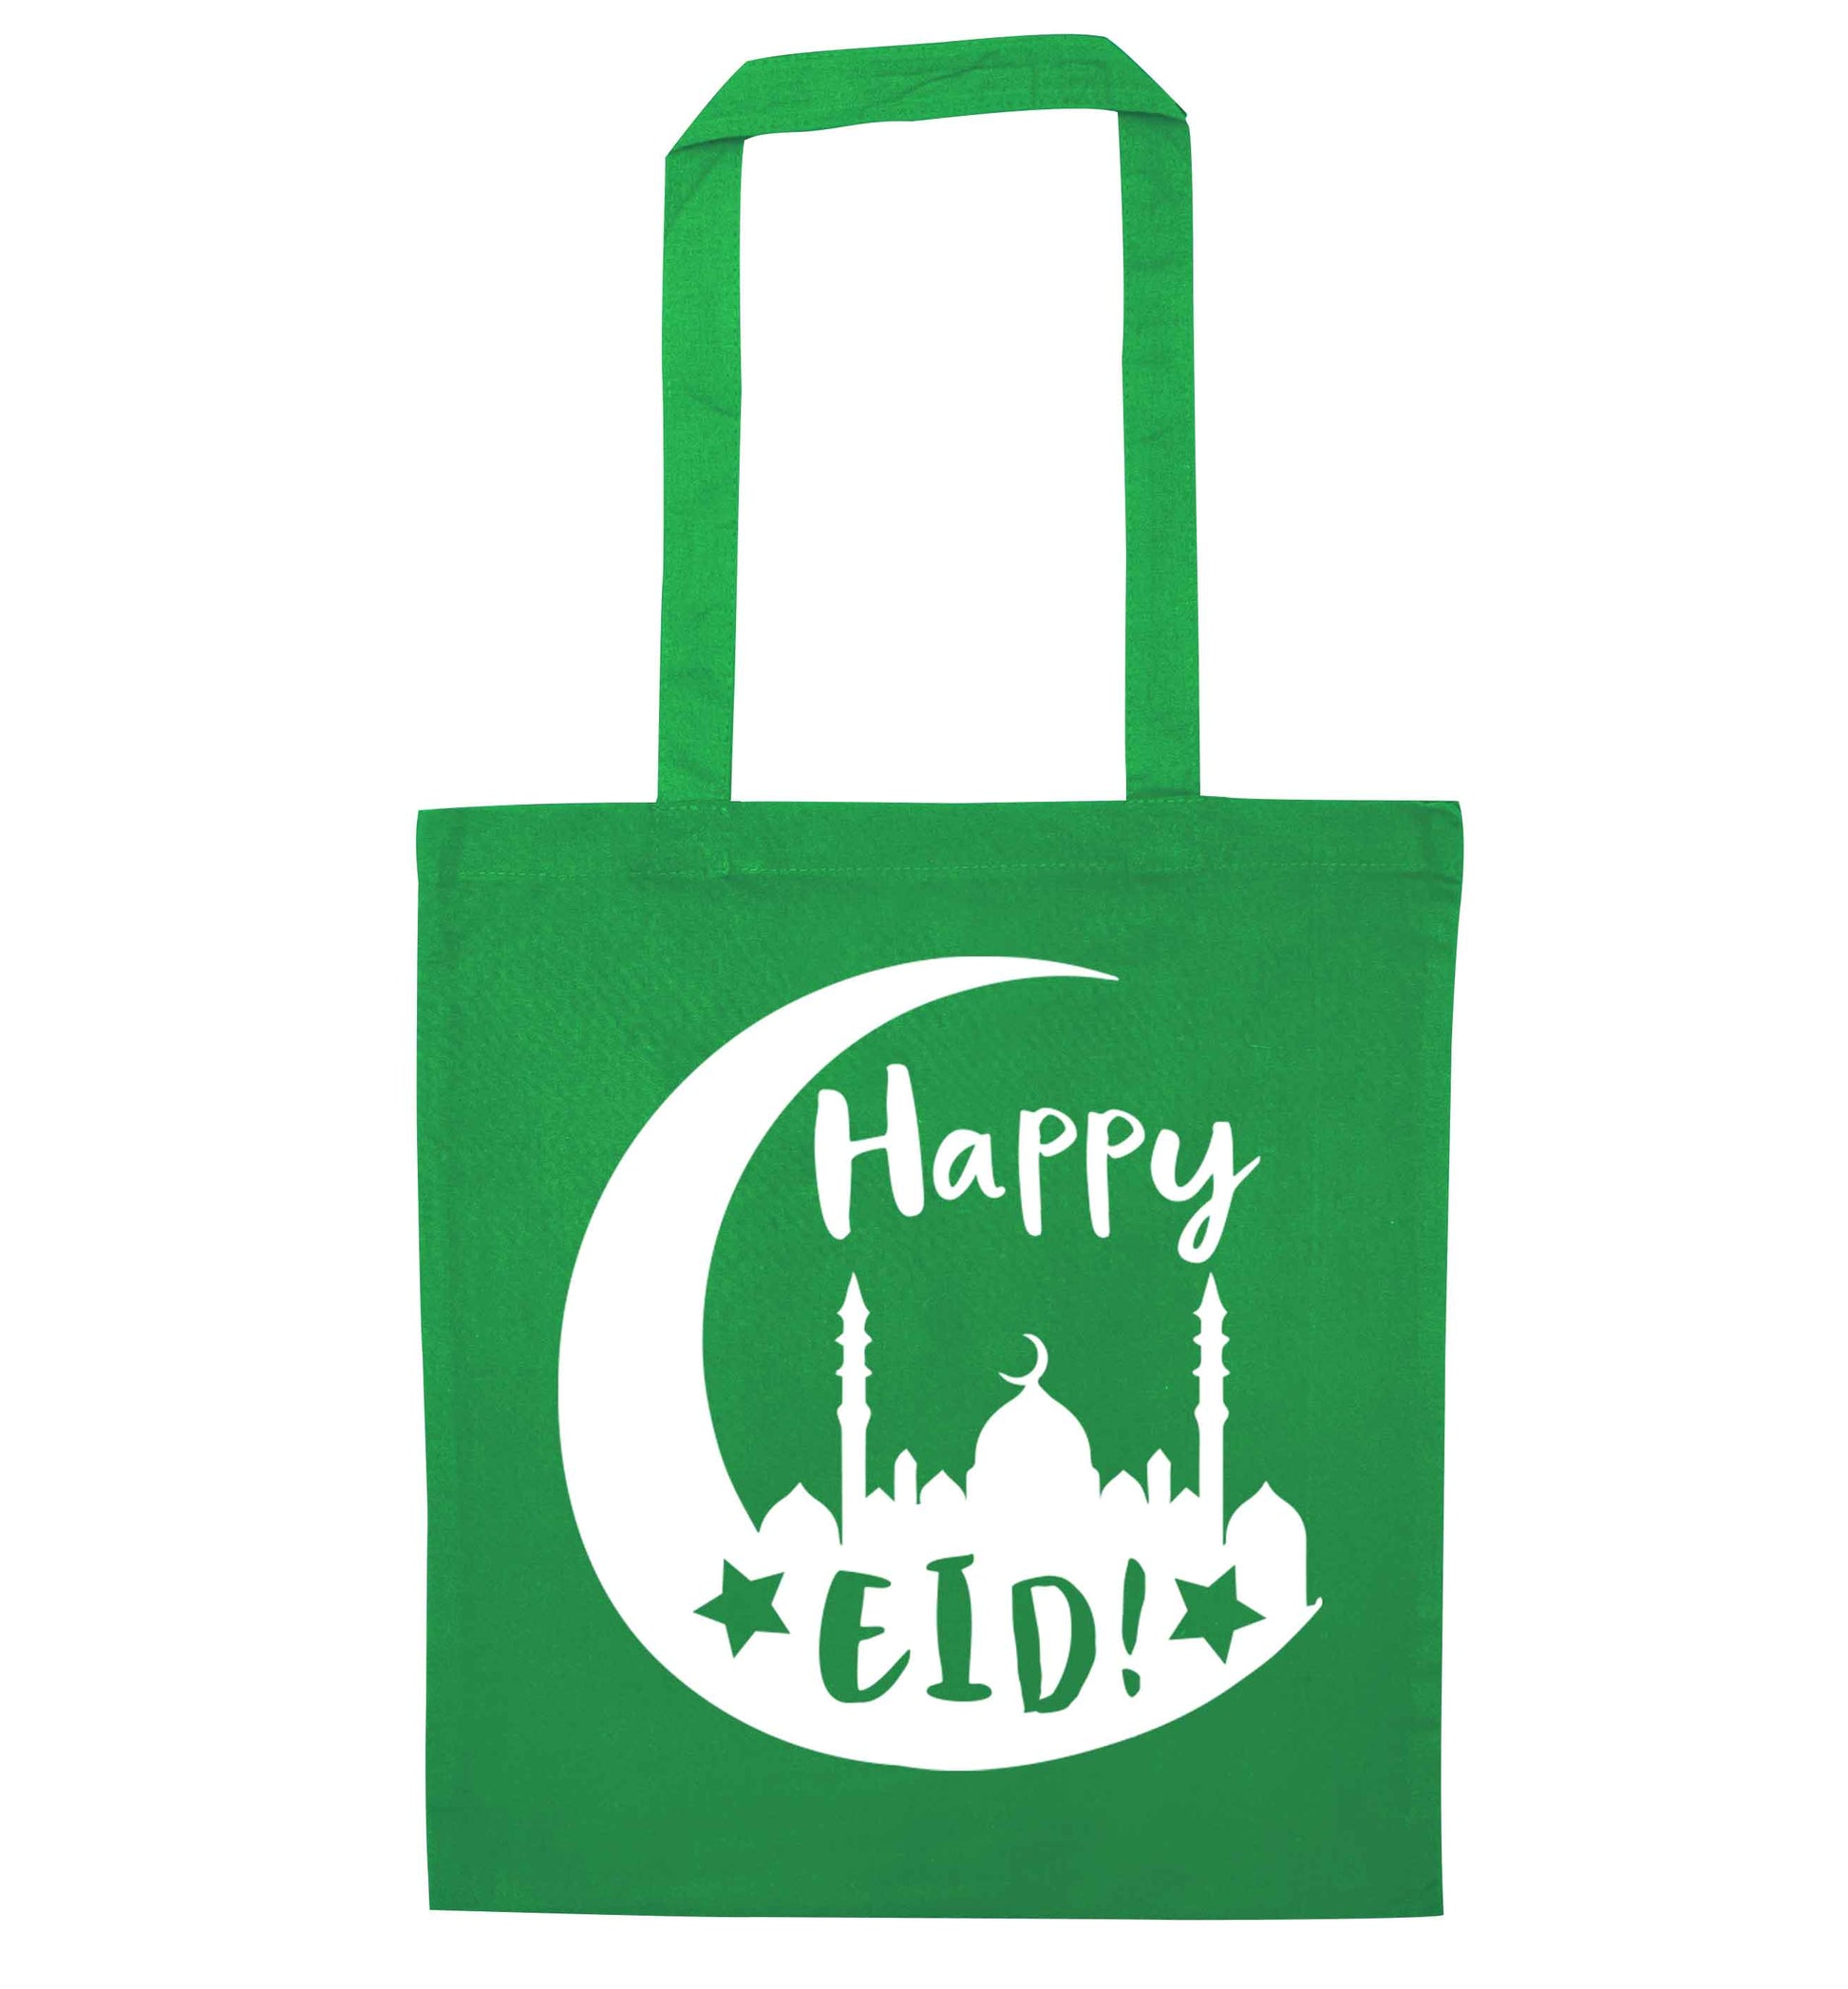 Happy Eid green tote bag